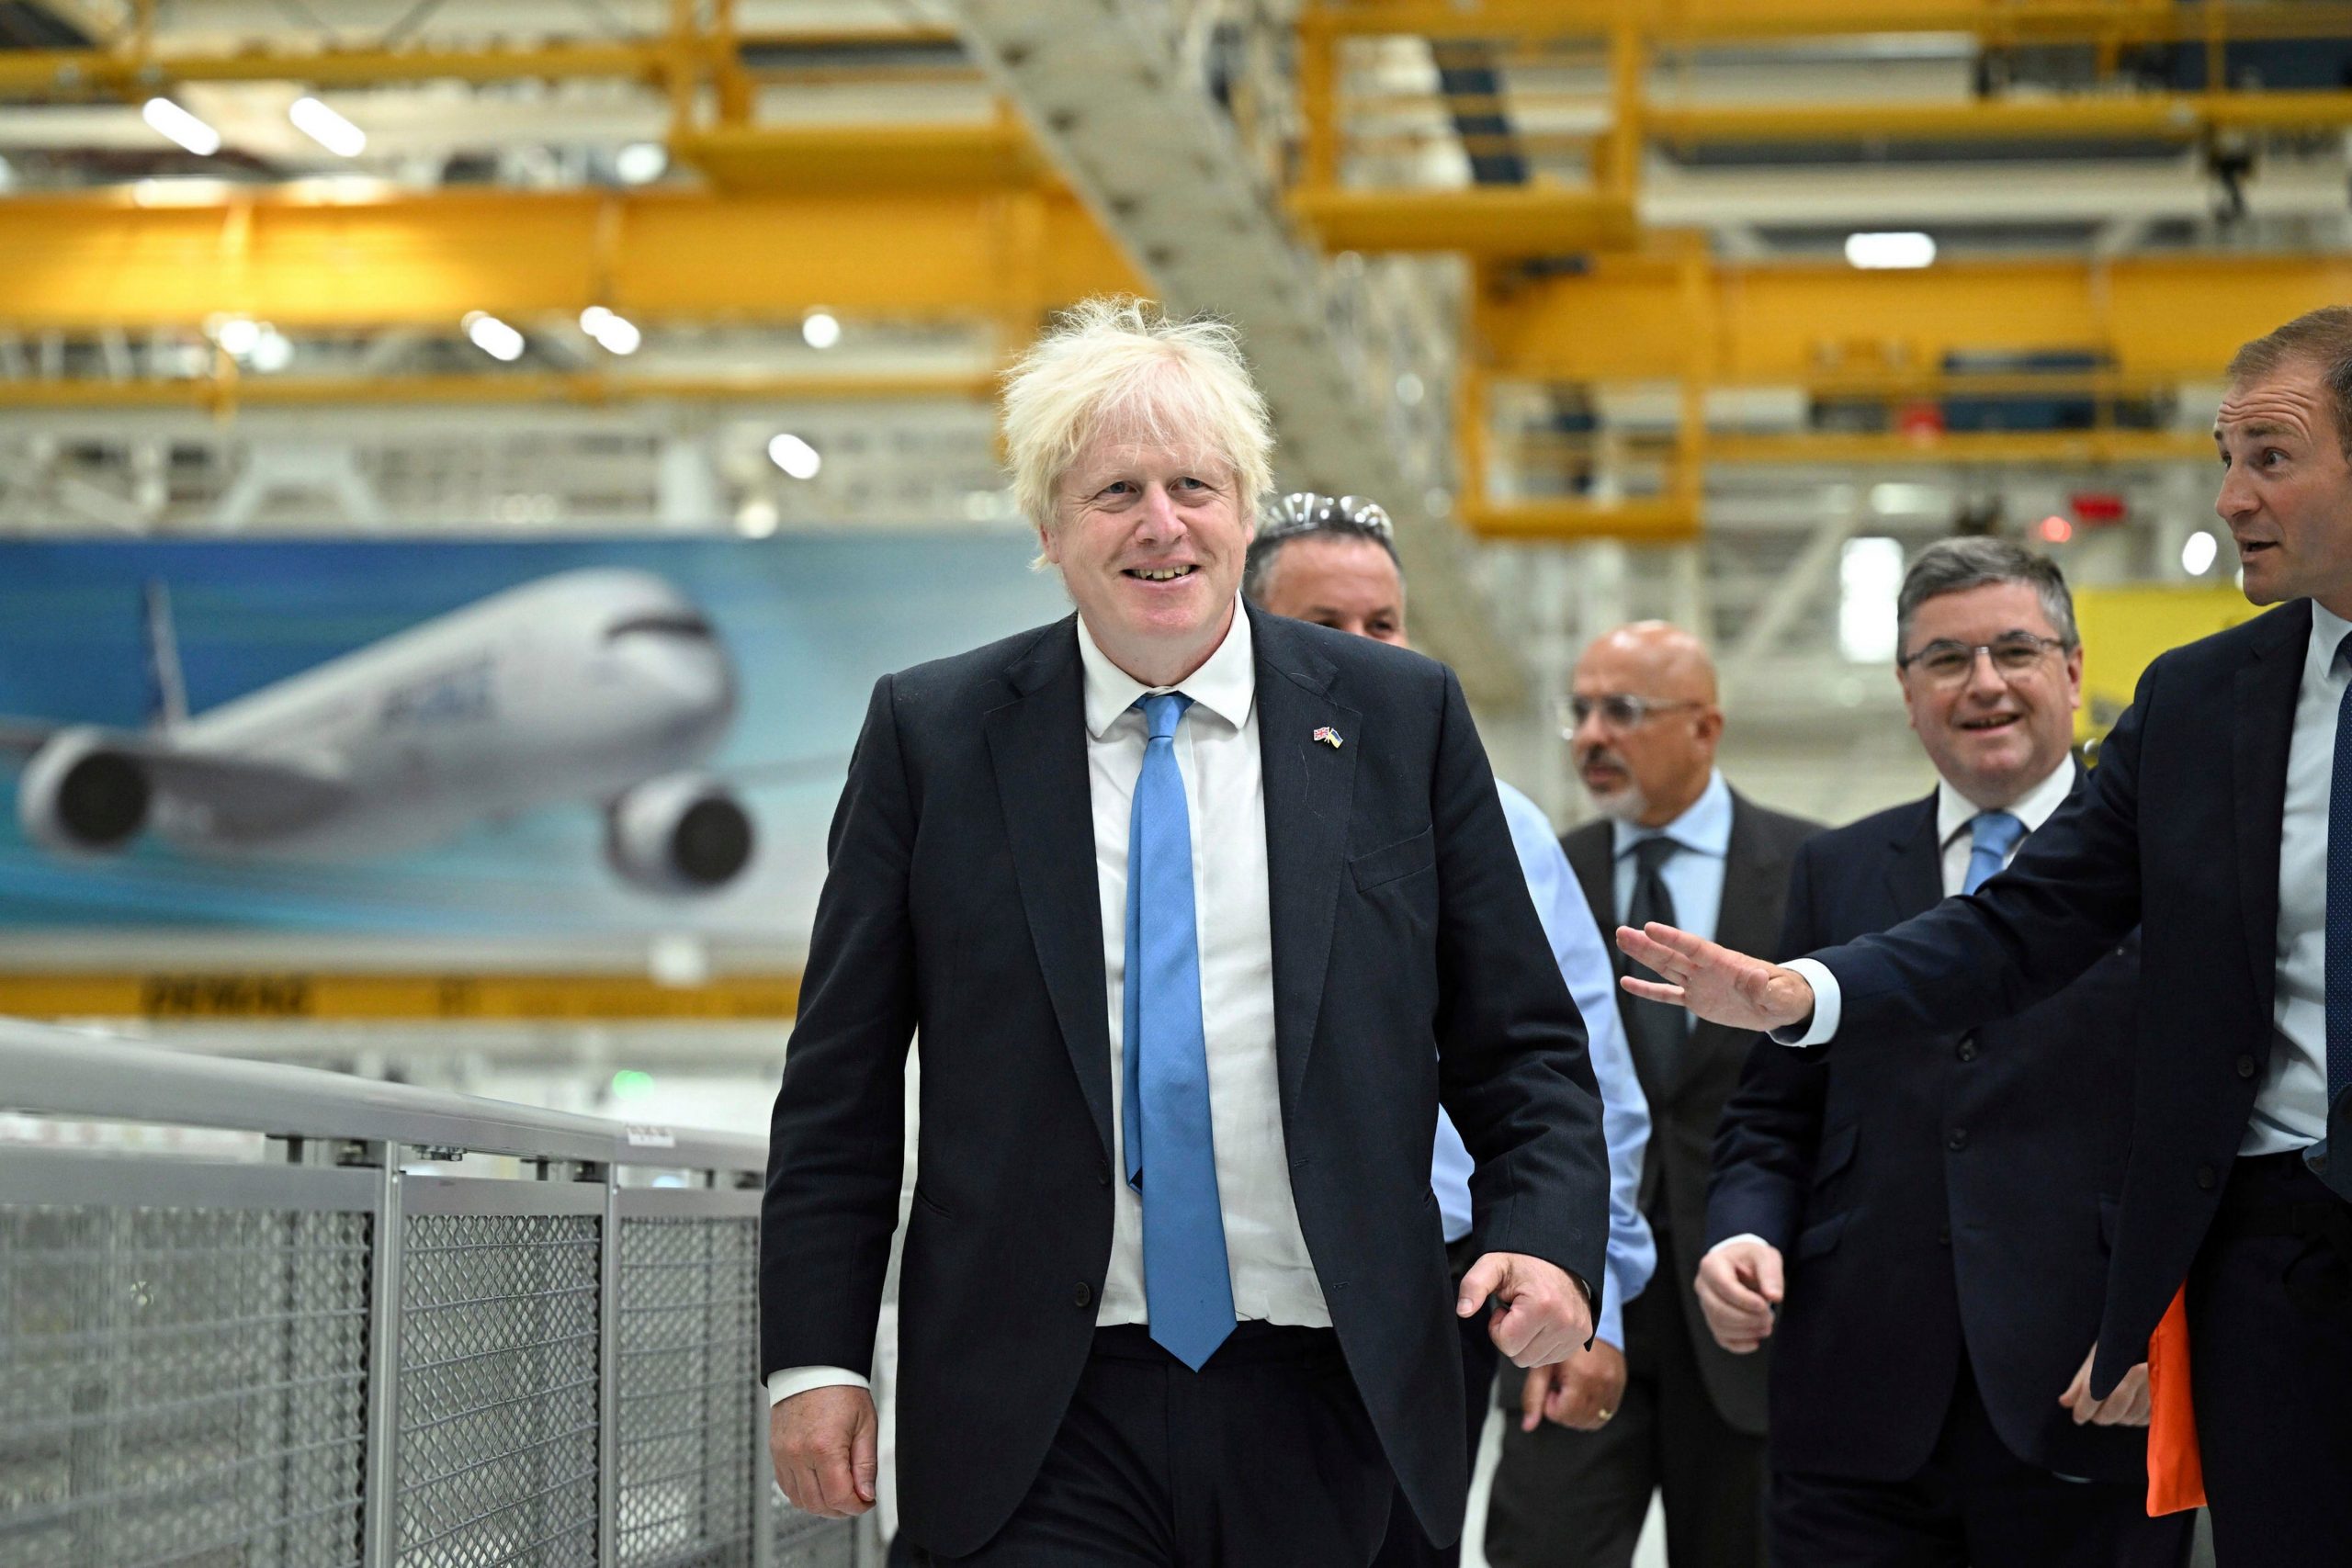 Boris Johnson wants Rishi Sunak to stand down from UK PM race: Report